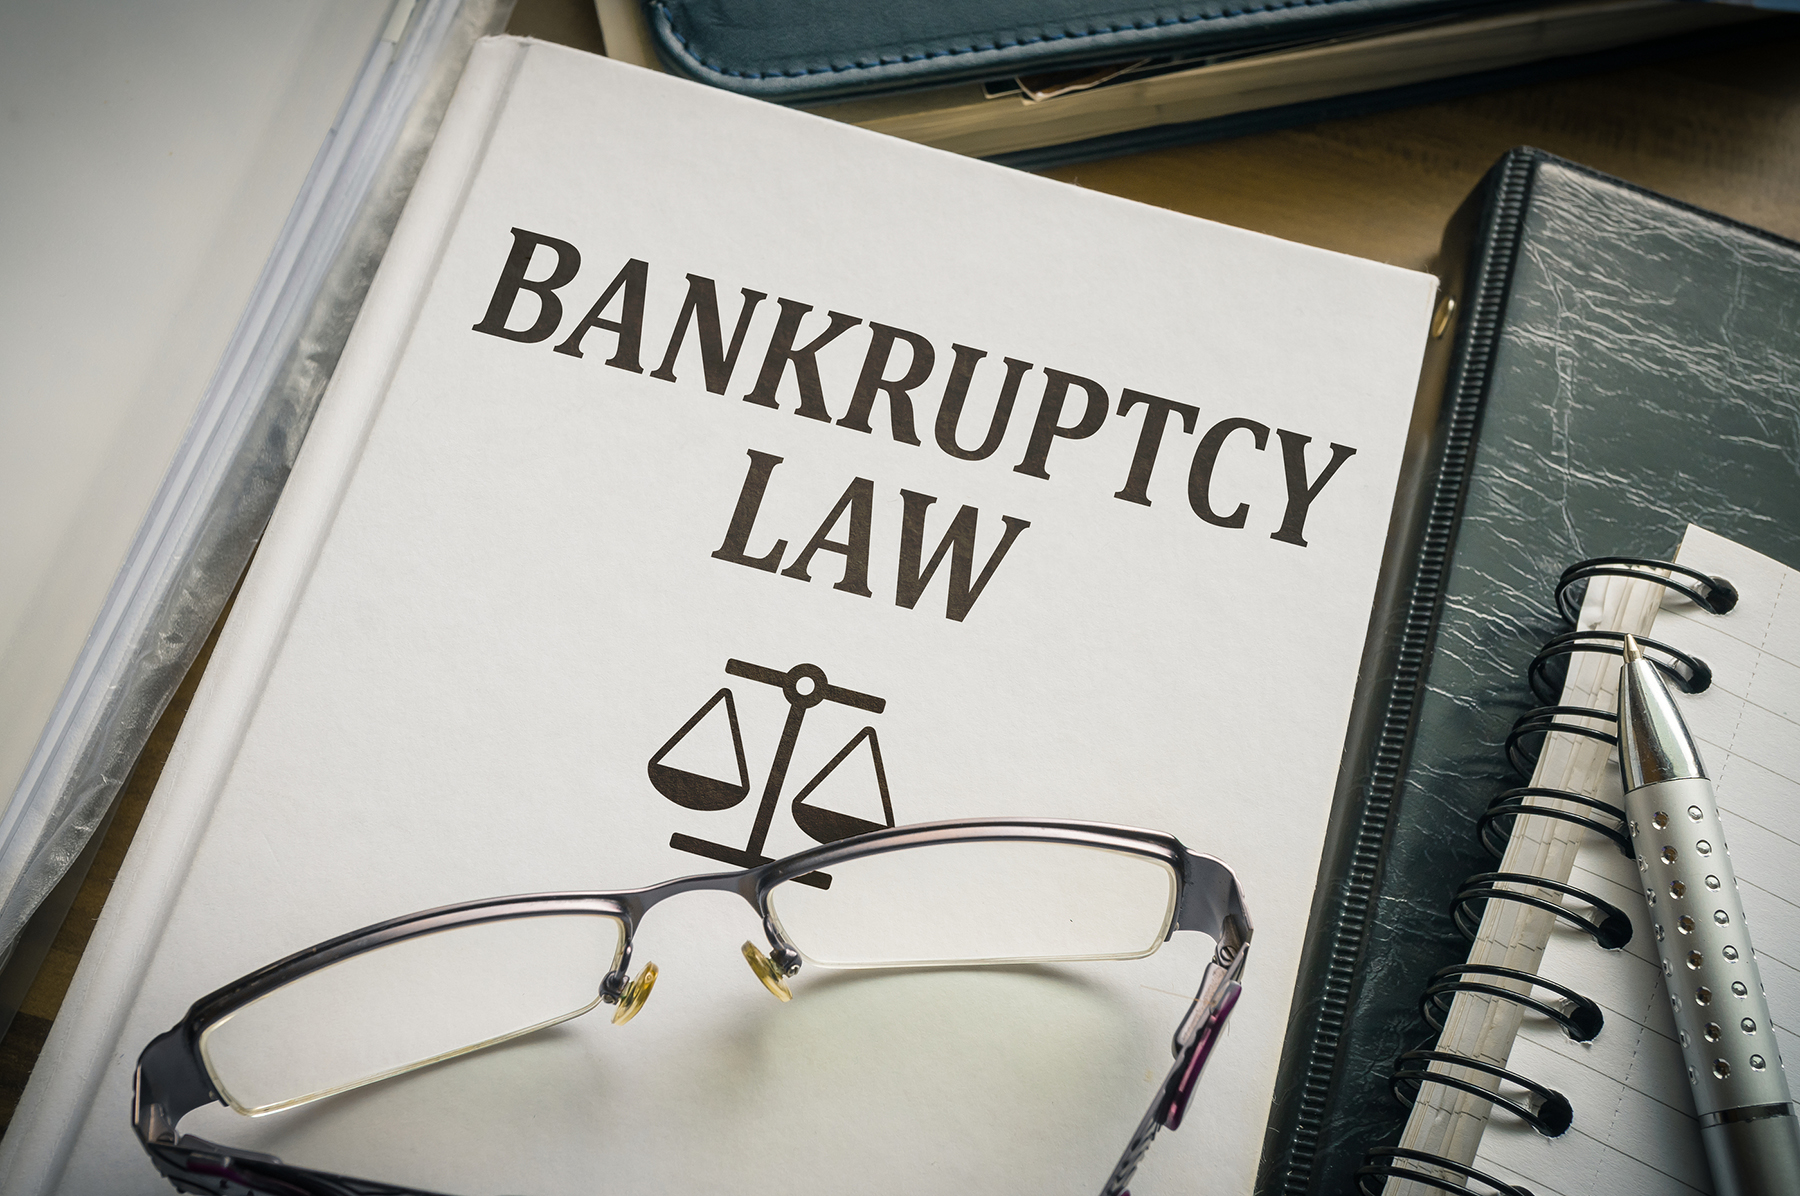 Nevada Bankruptcy Lawyer